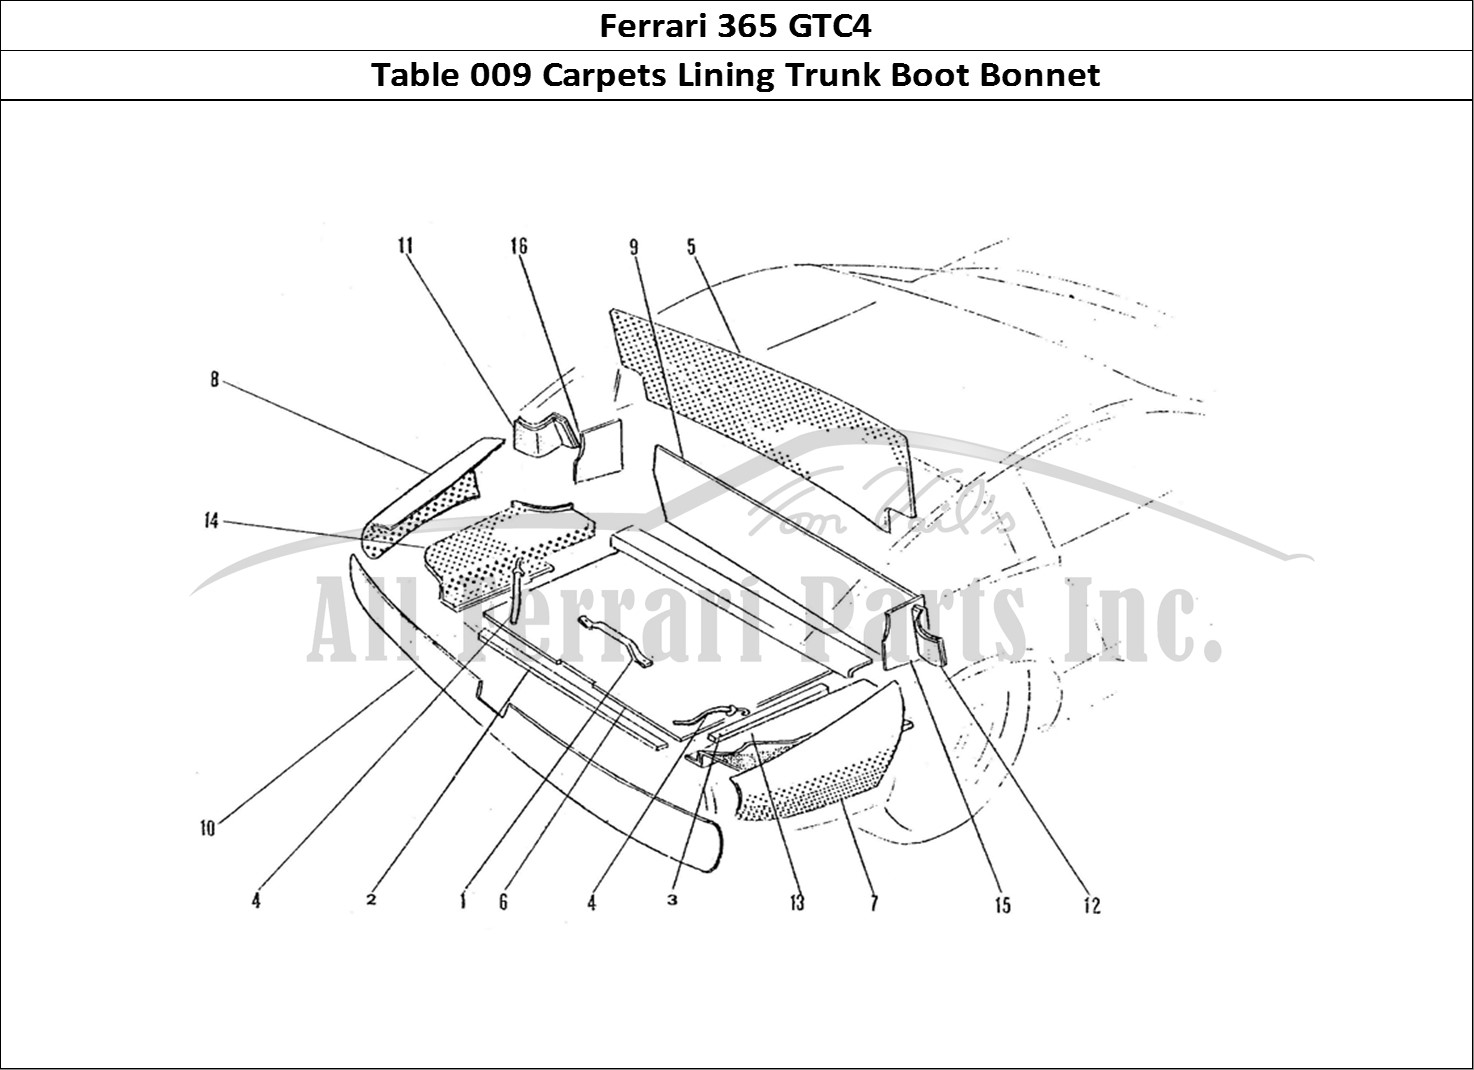 Ferrari Parts Ferrari 365 GTC4 (Coachwork) Page 009 Inner Boot Lid Carpets